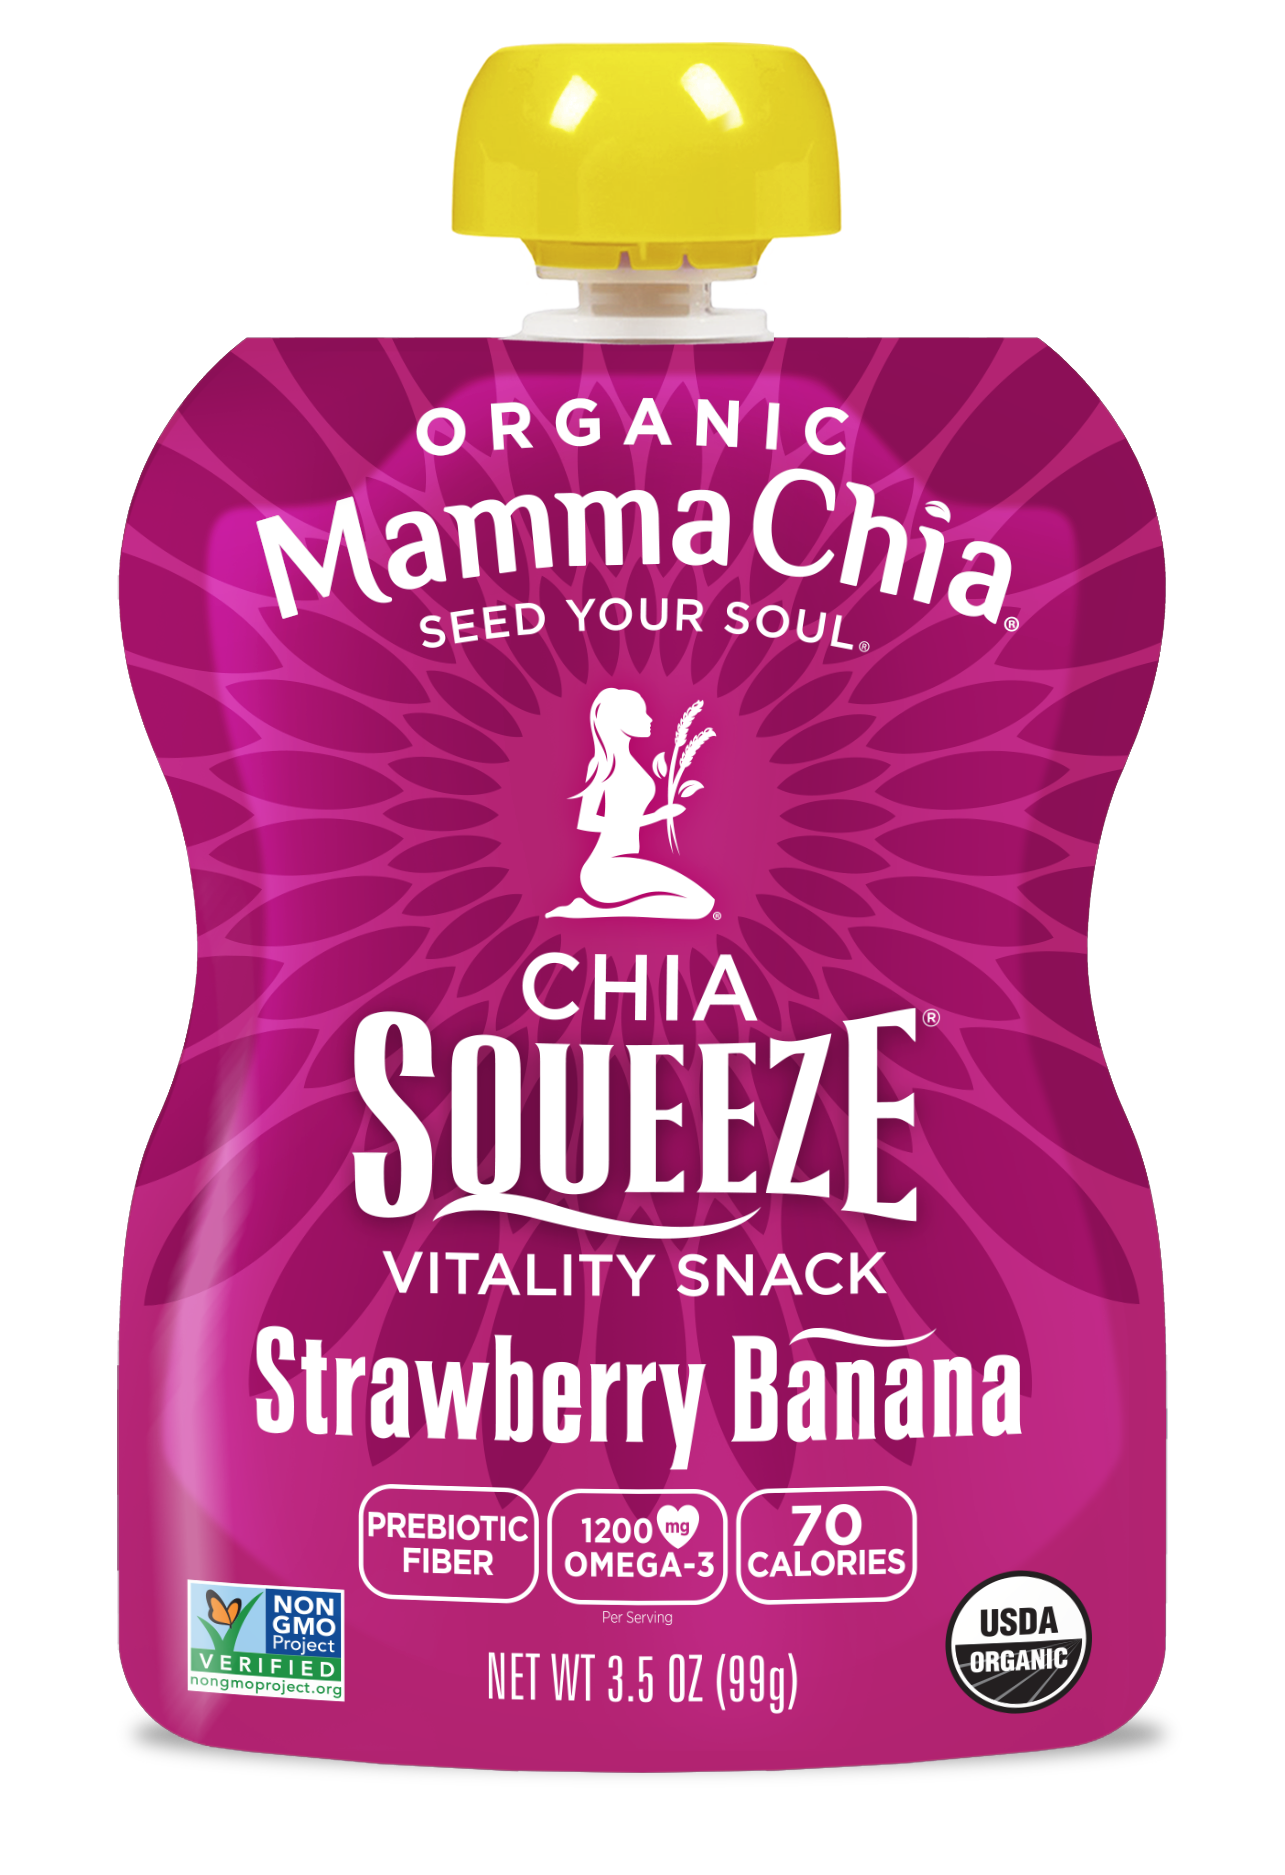 Mamma Chia Strawberry Banana Organic Chia Squeeze 2 innerpacks per case 28.0 oz